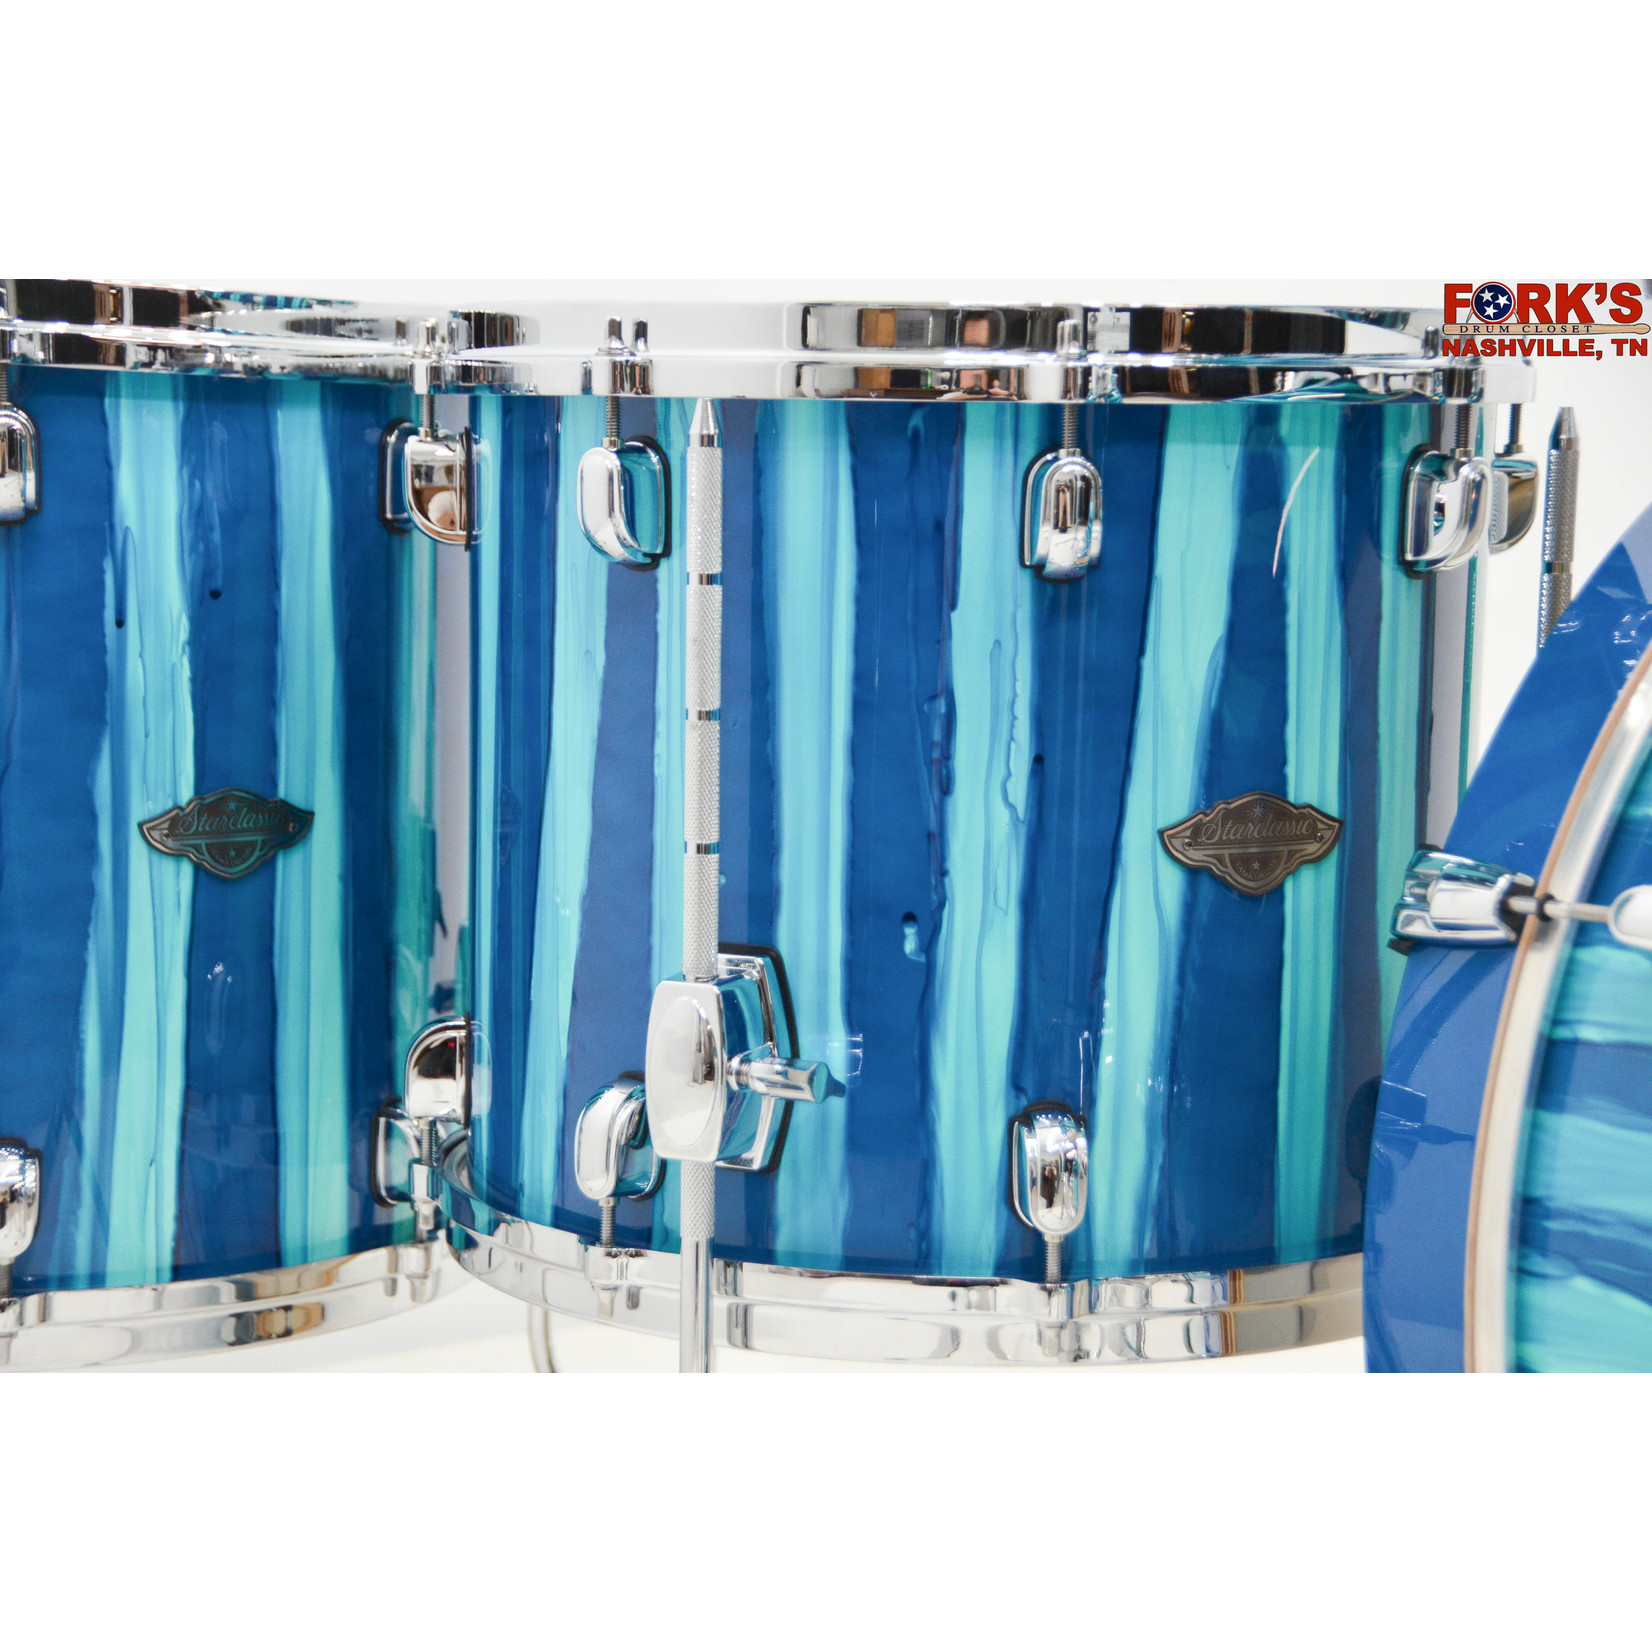 Tama Tama Starclassic Performer 5pc Drum Kit - "Sky Blue Aurora"